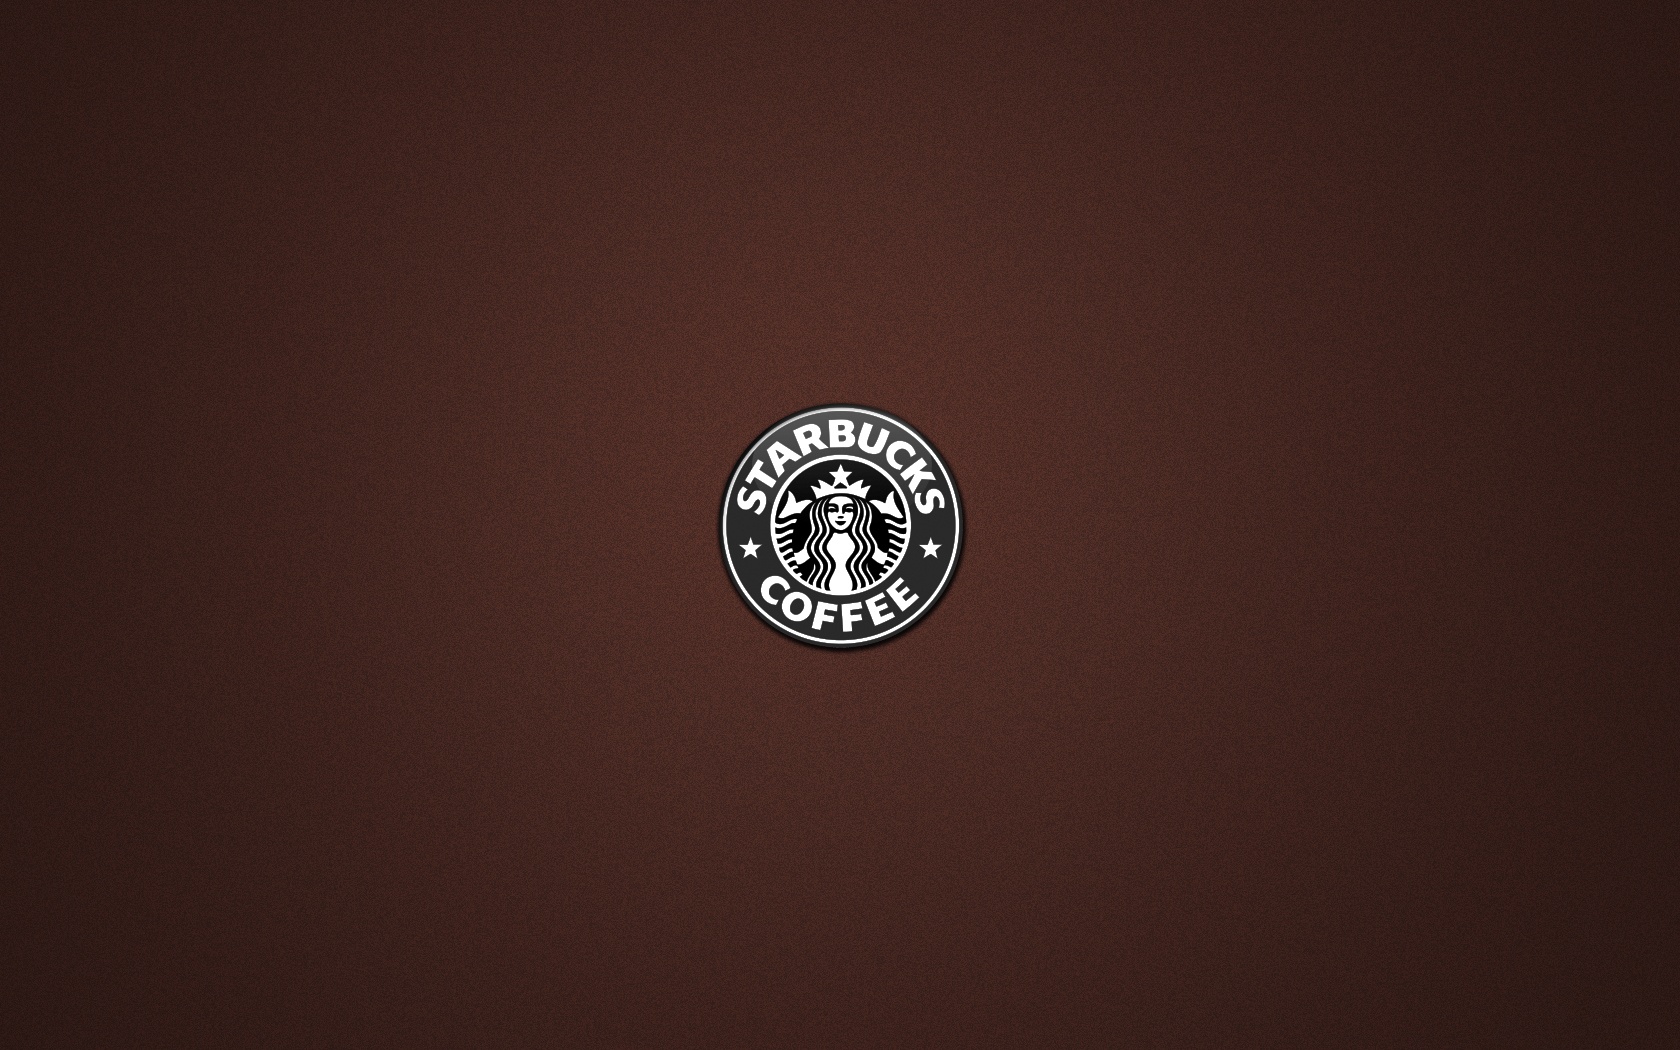 Starbucks Dark Background